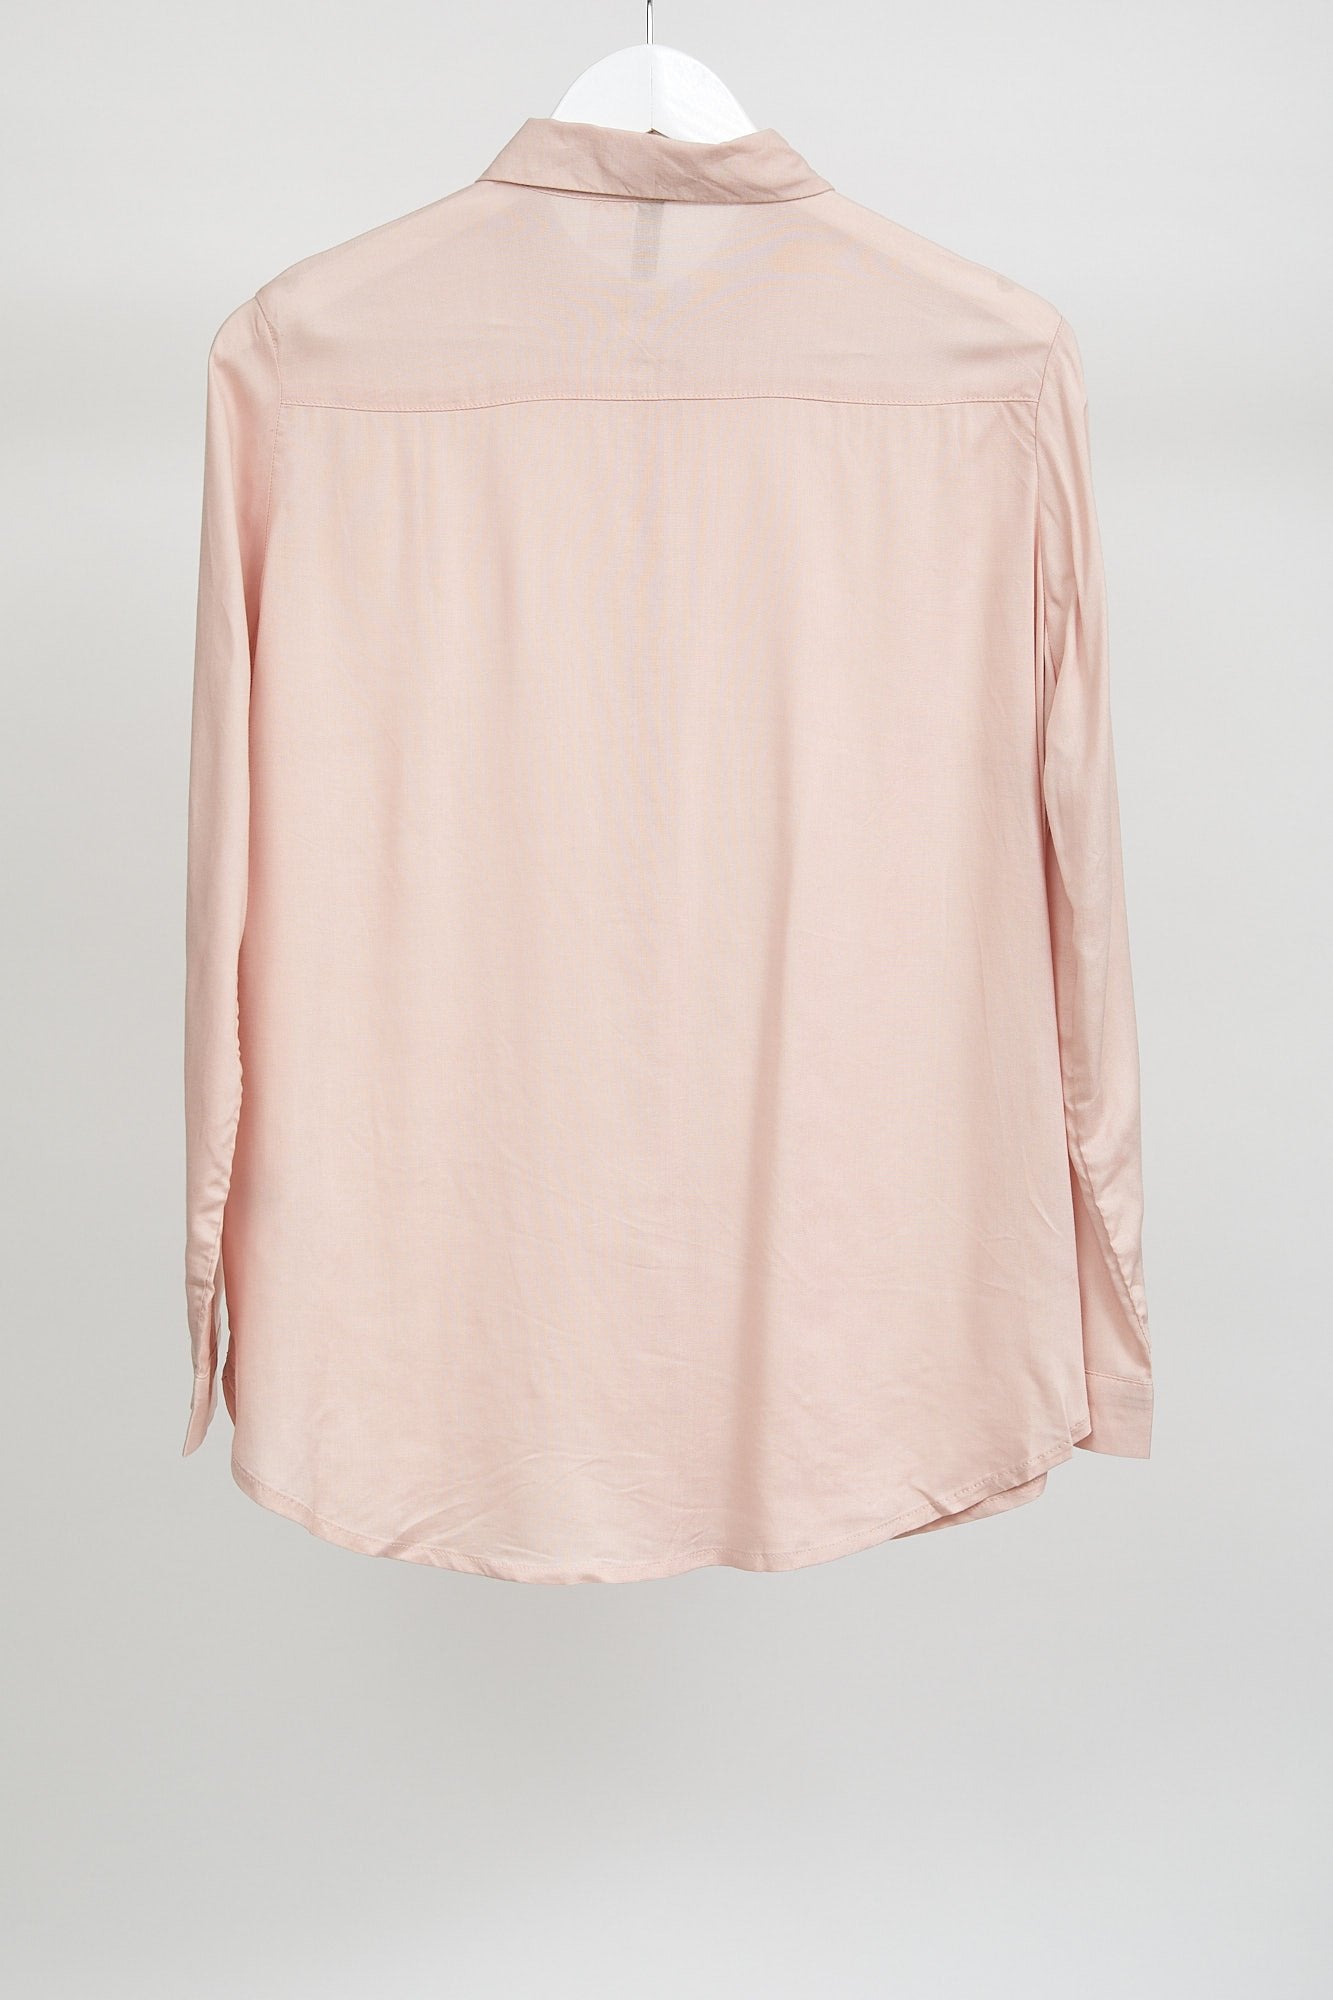 Womens H&M Pink shirt: Medium or 12